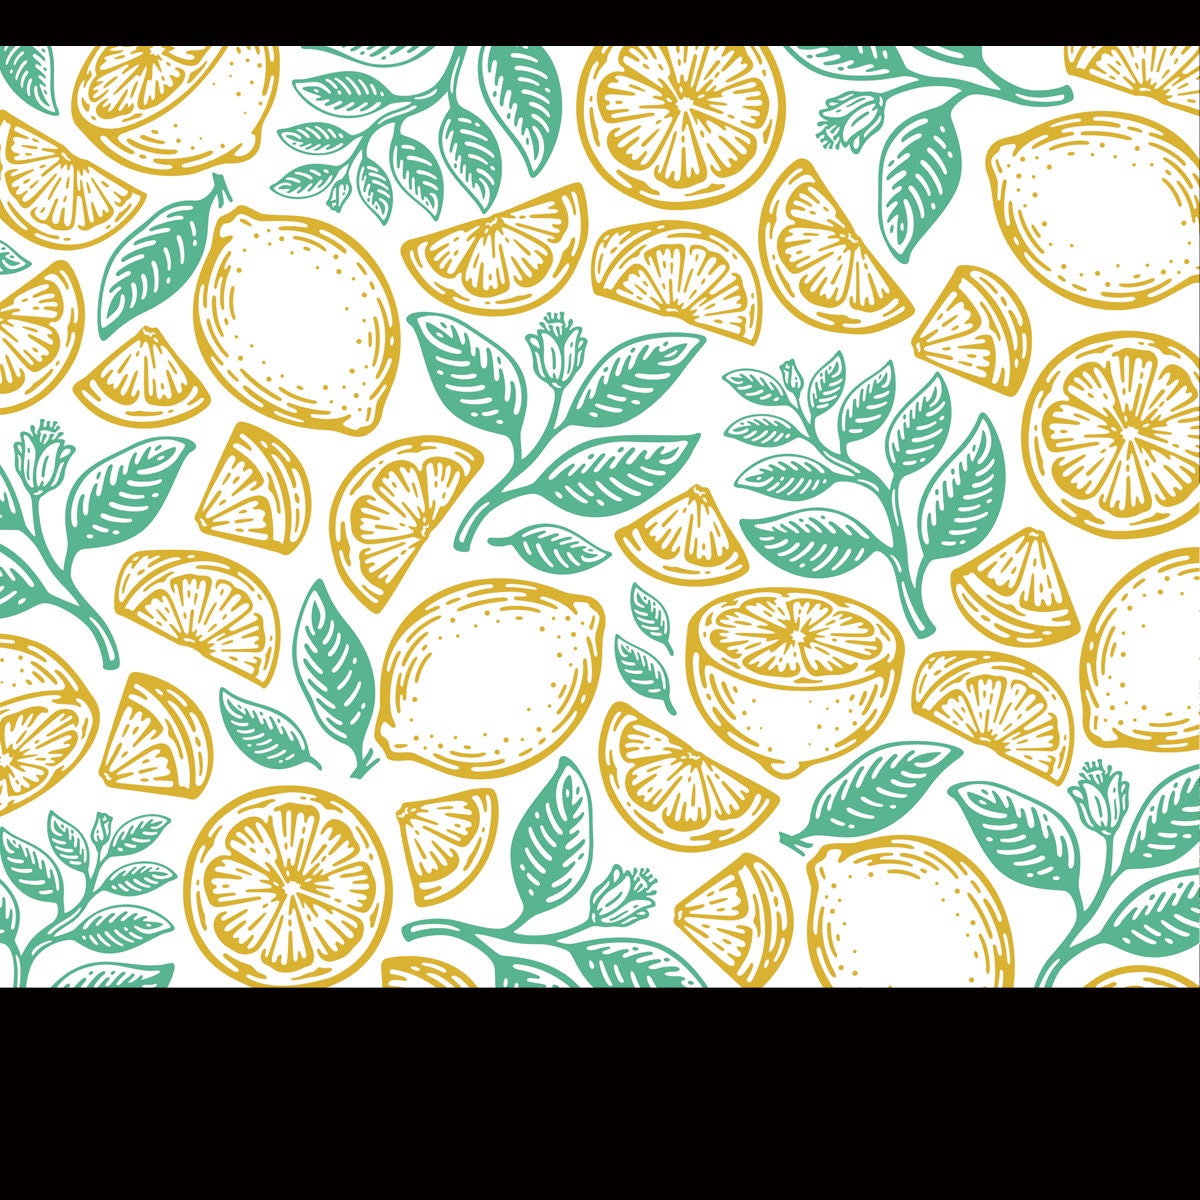 Single Pattern of Lemon Fruits in Vintage Design Wallpaper Kitchen Mural